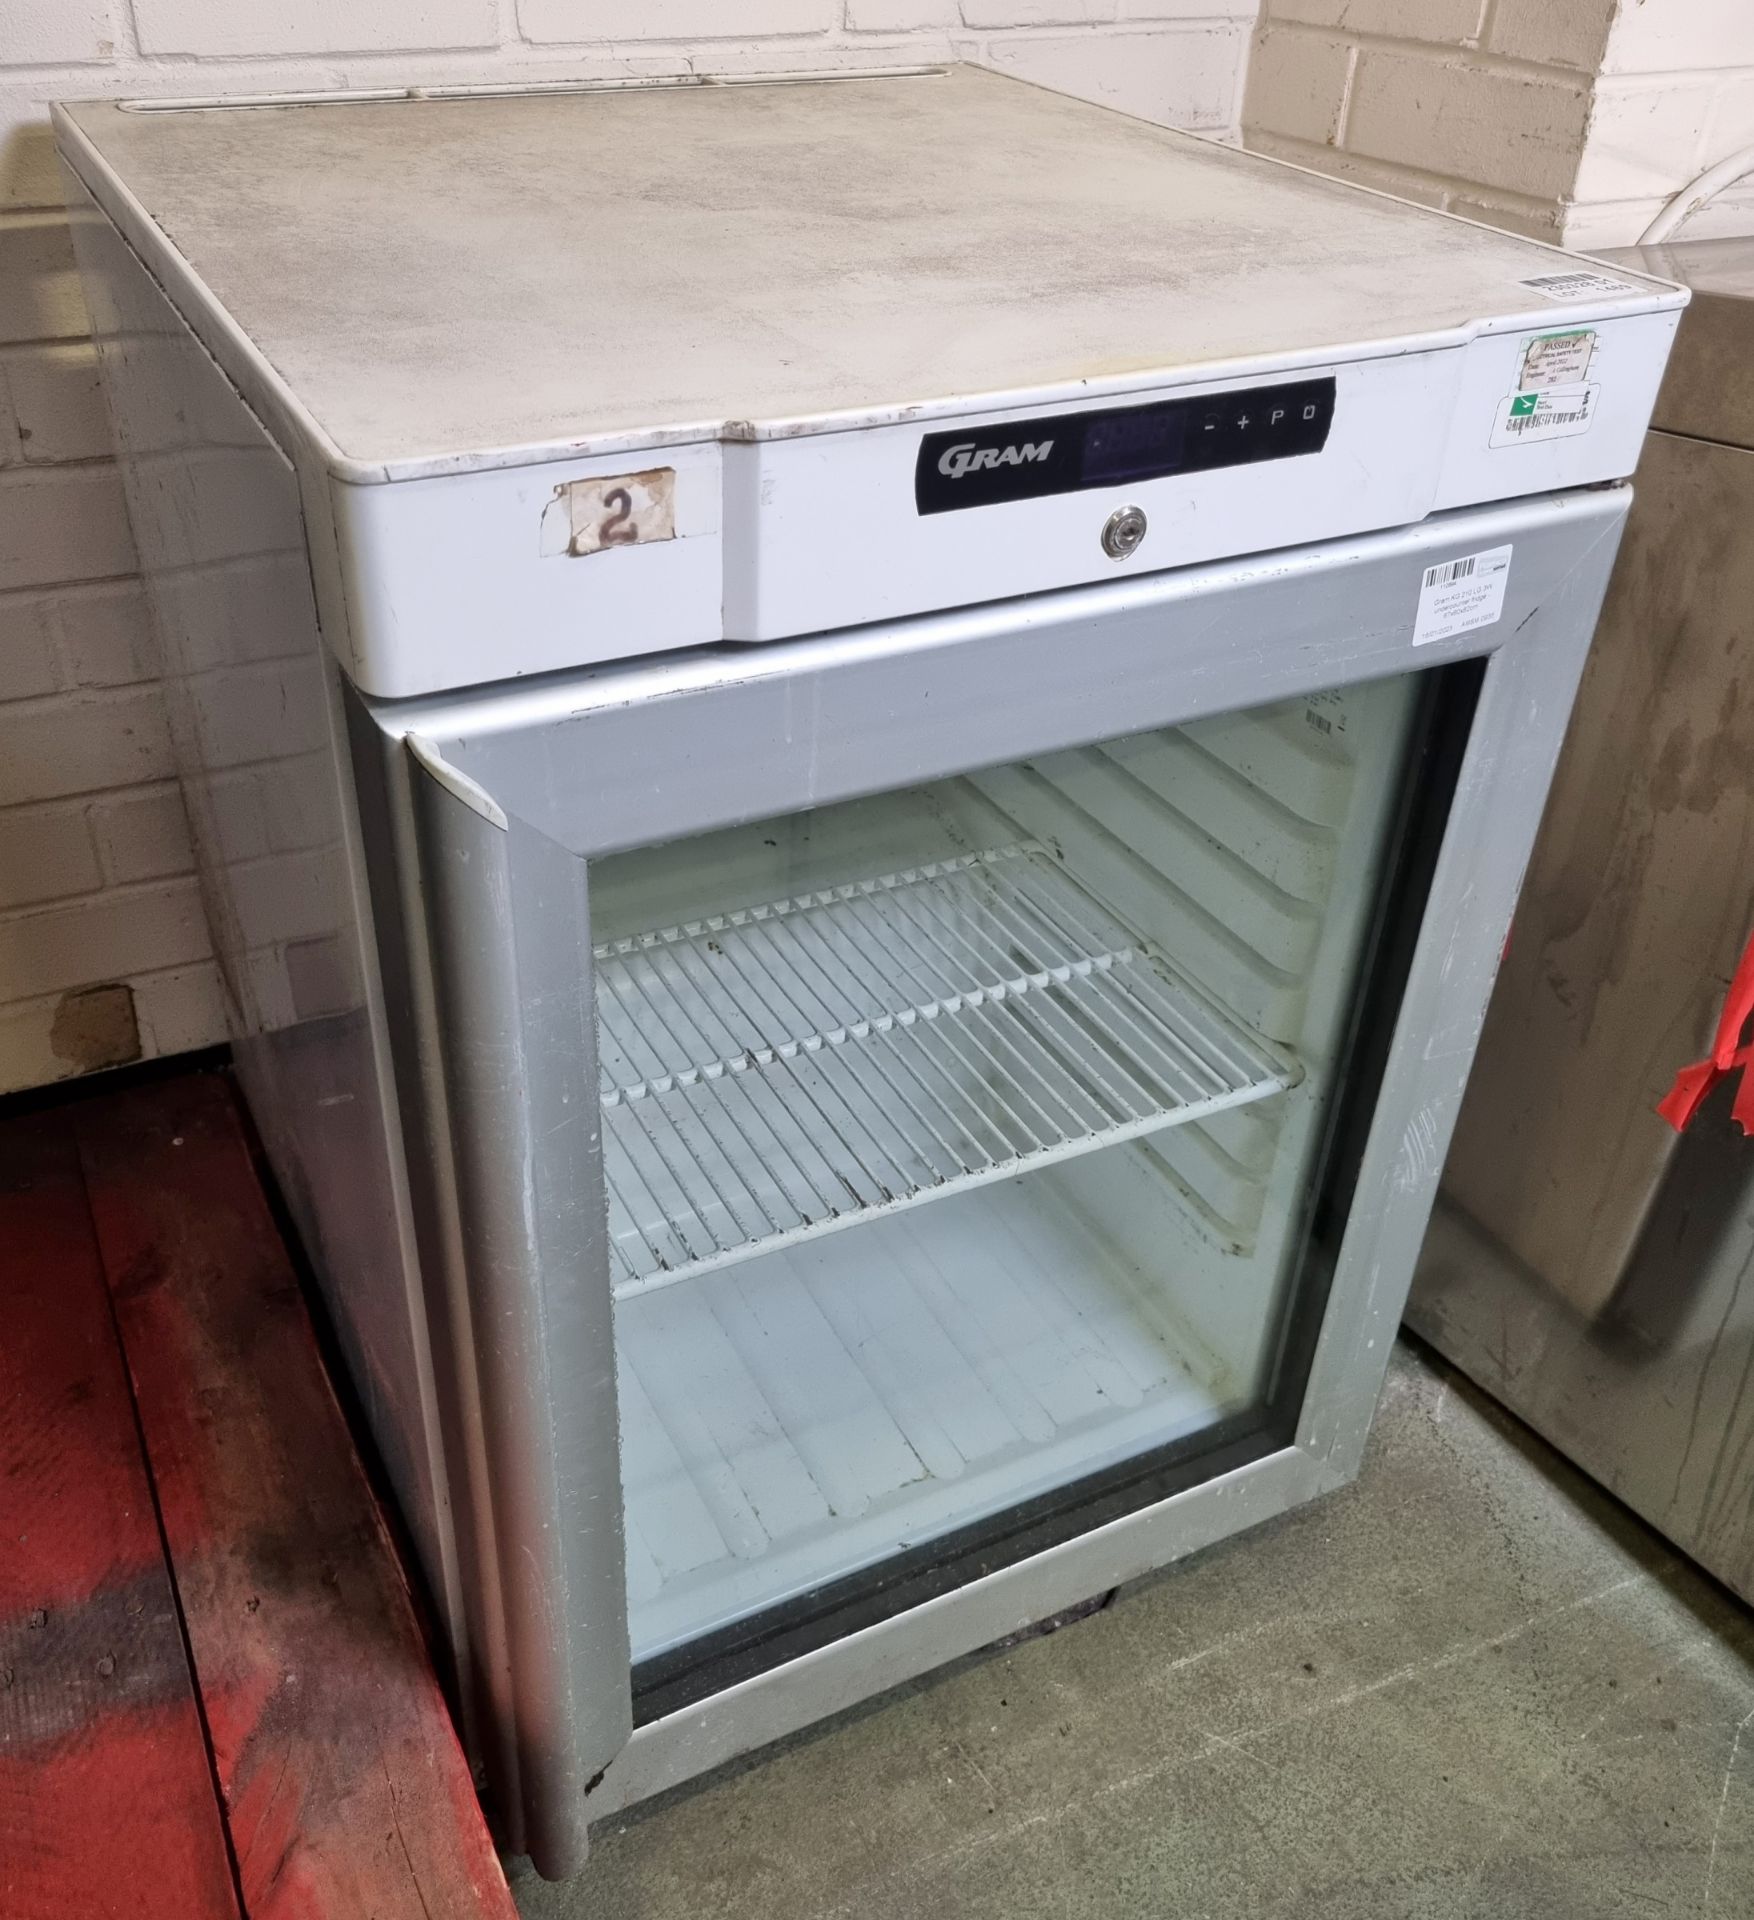 Gram KG 210 LG 3W undercounter fridge - 67 x 60 x 82cm - Image 3 of 5